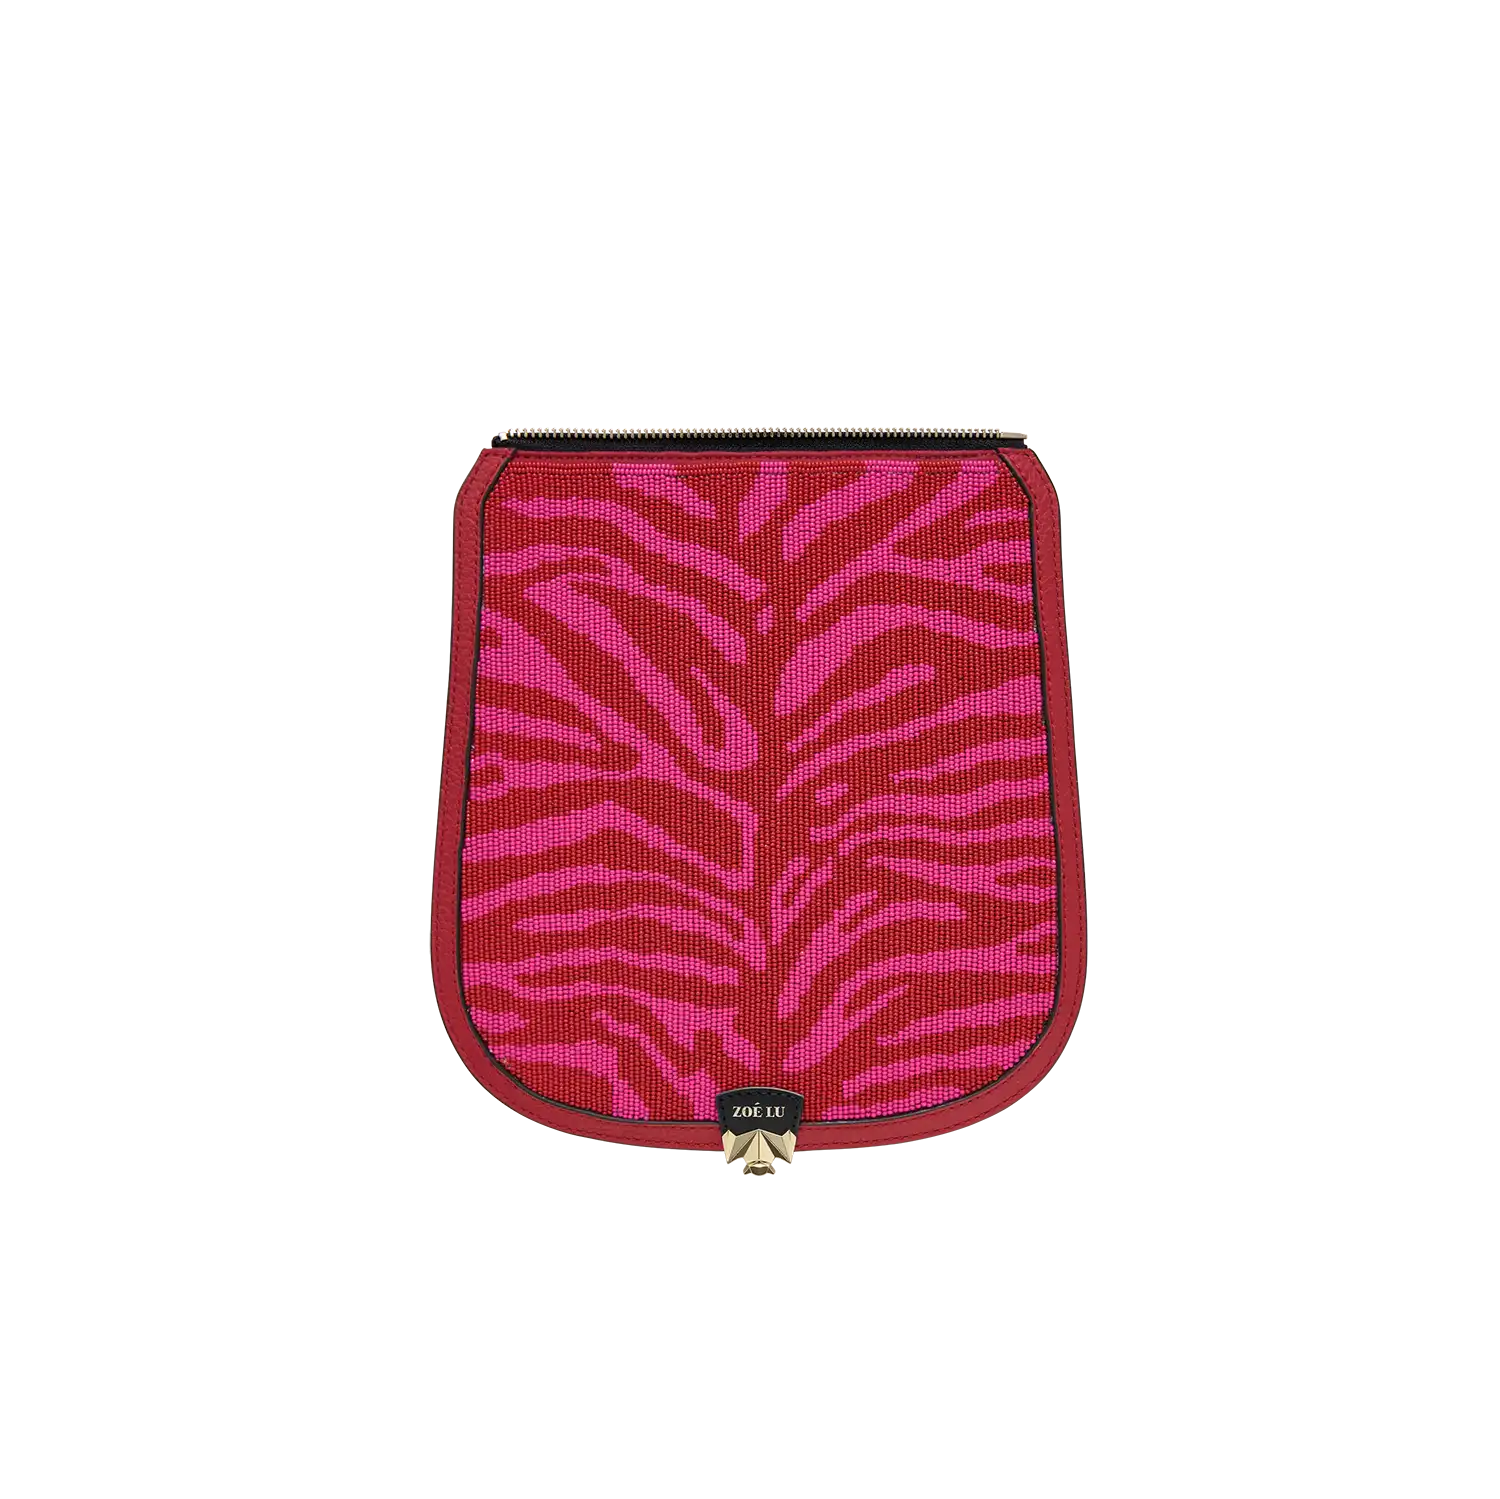 Wechselklappe - Zebra Paradise - rot-pink